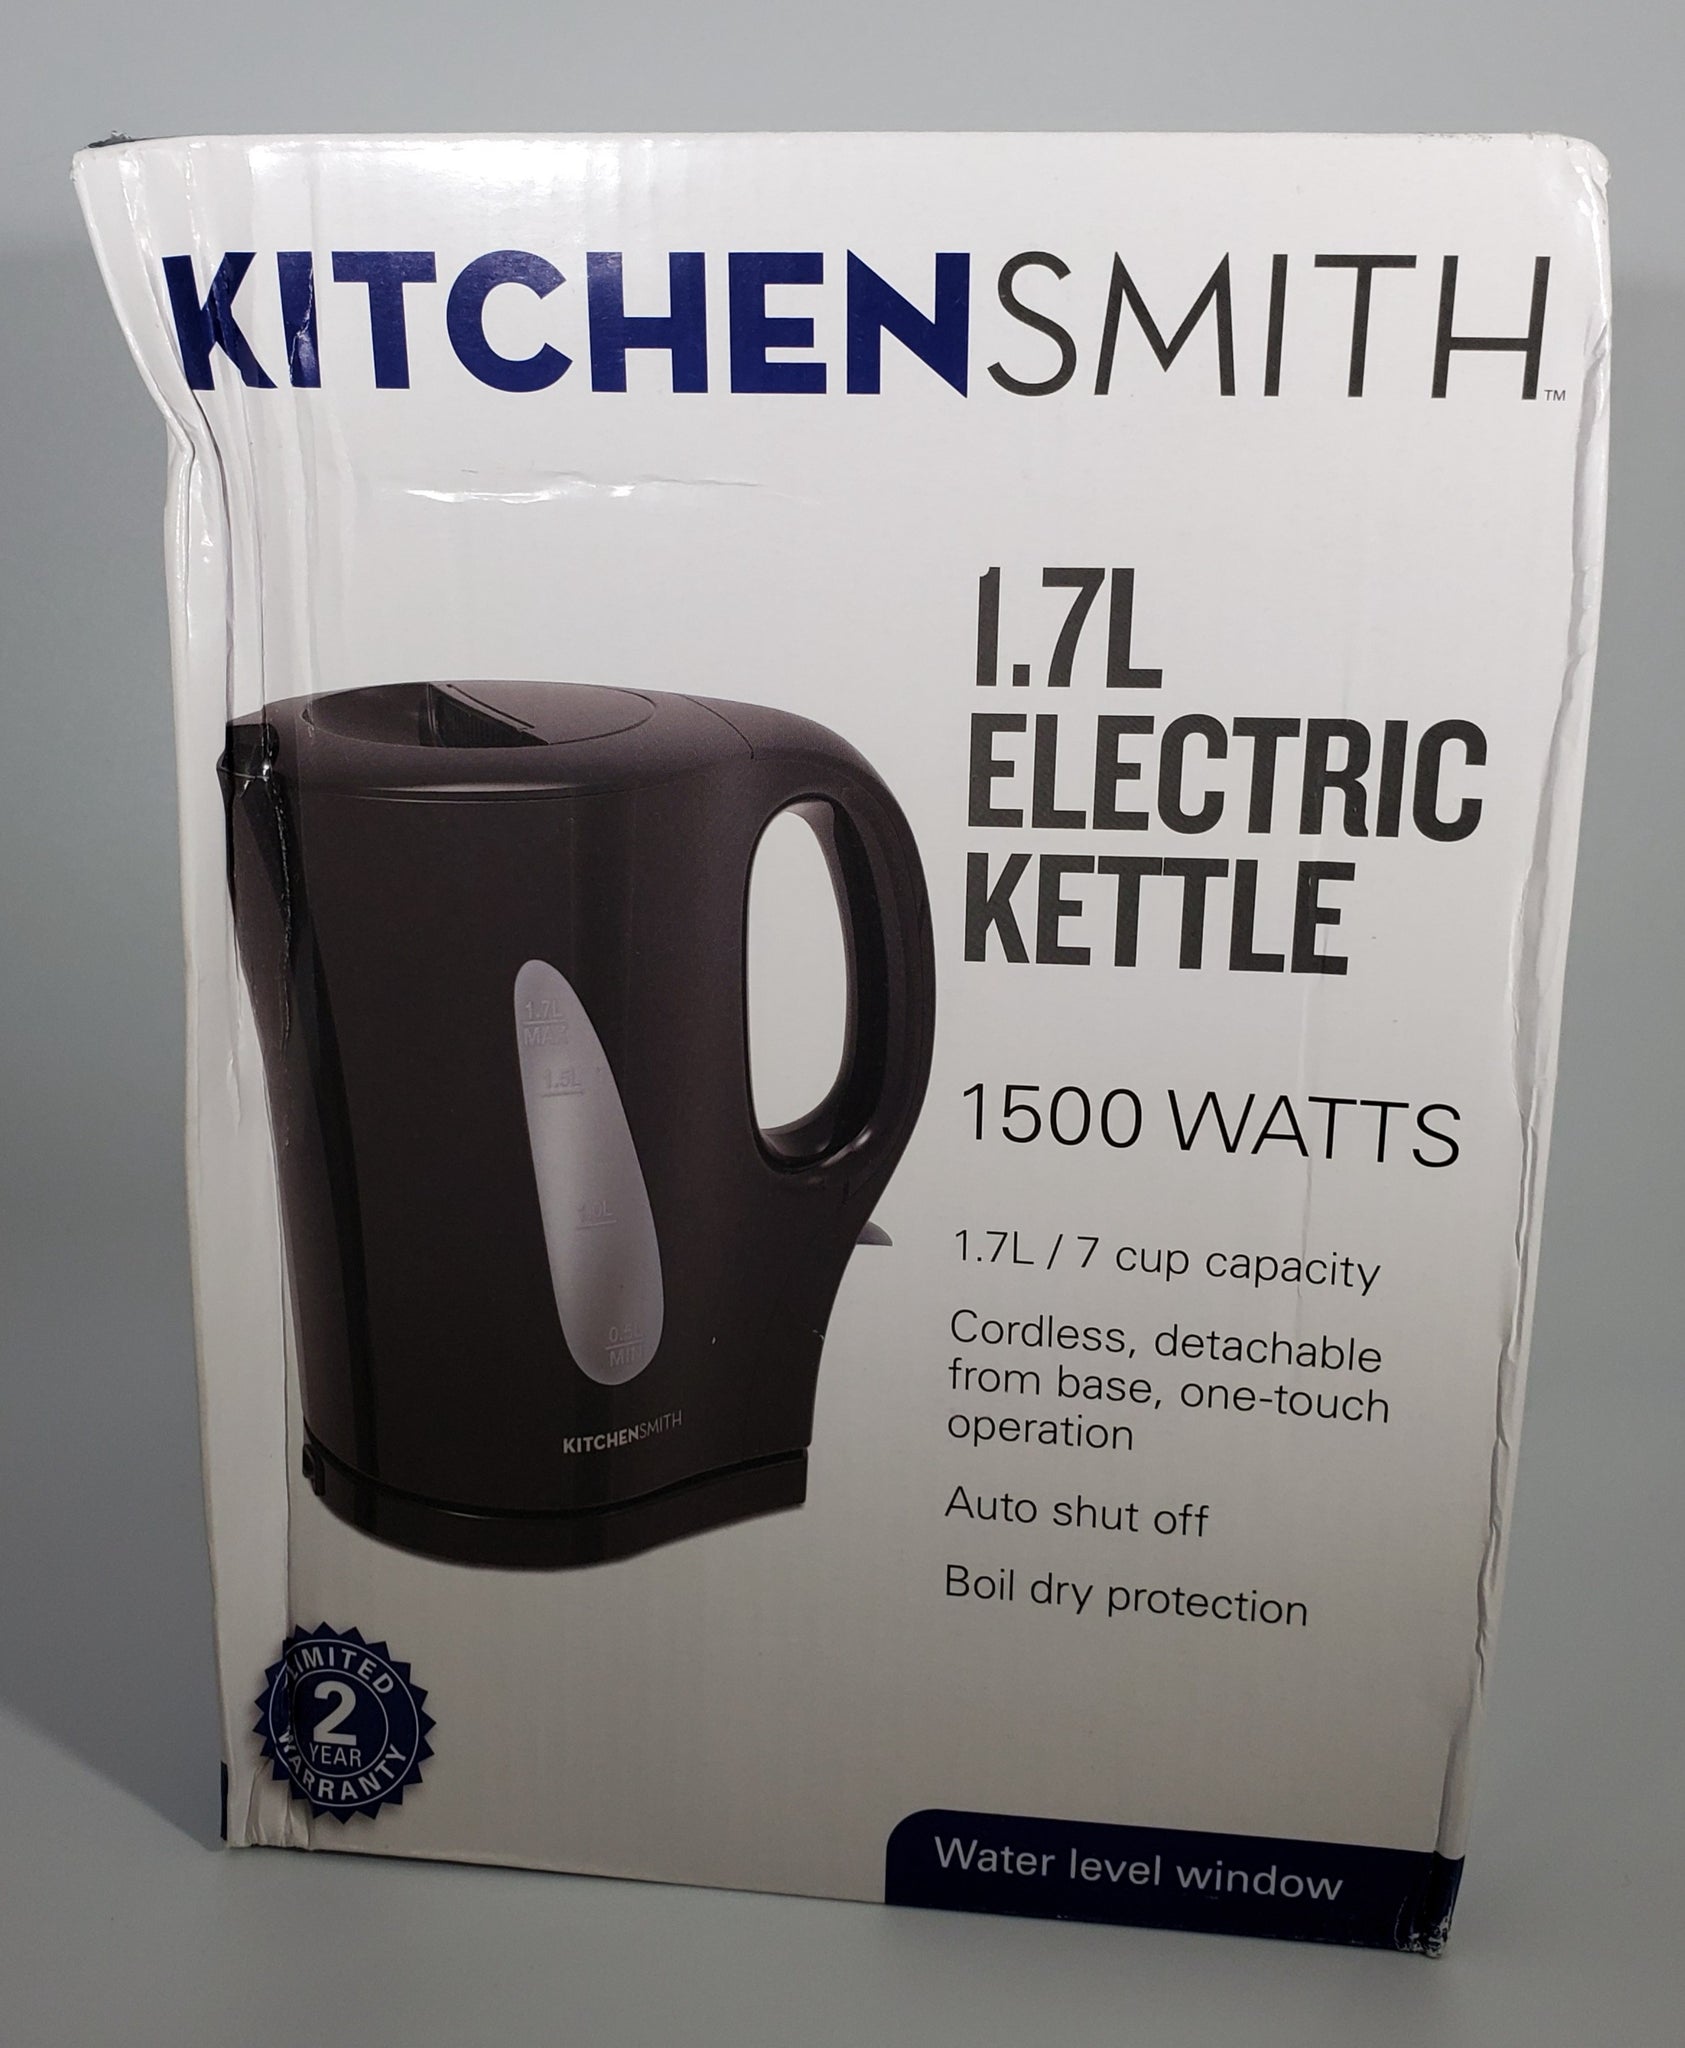 Kitchensmith By Bella Electric Tea Kettle - Black : Target